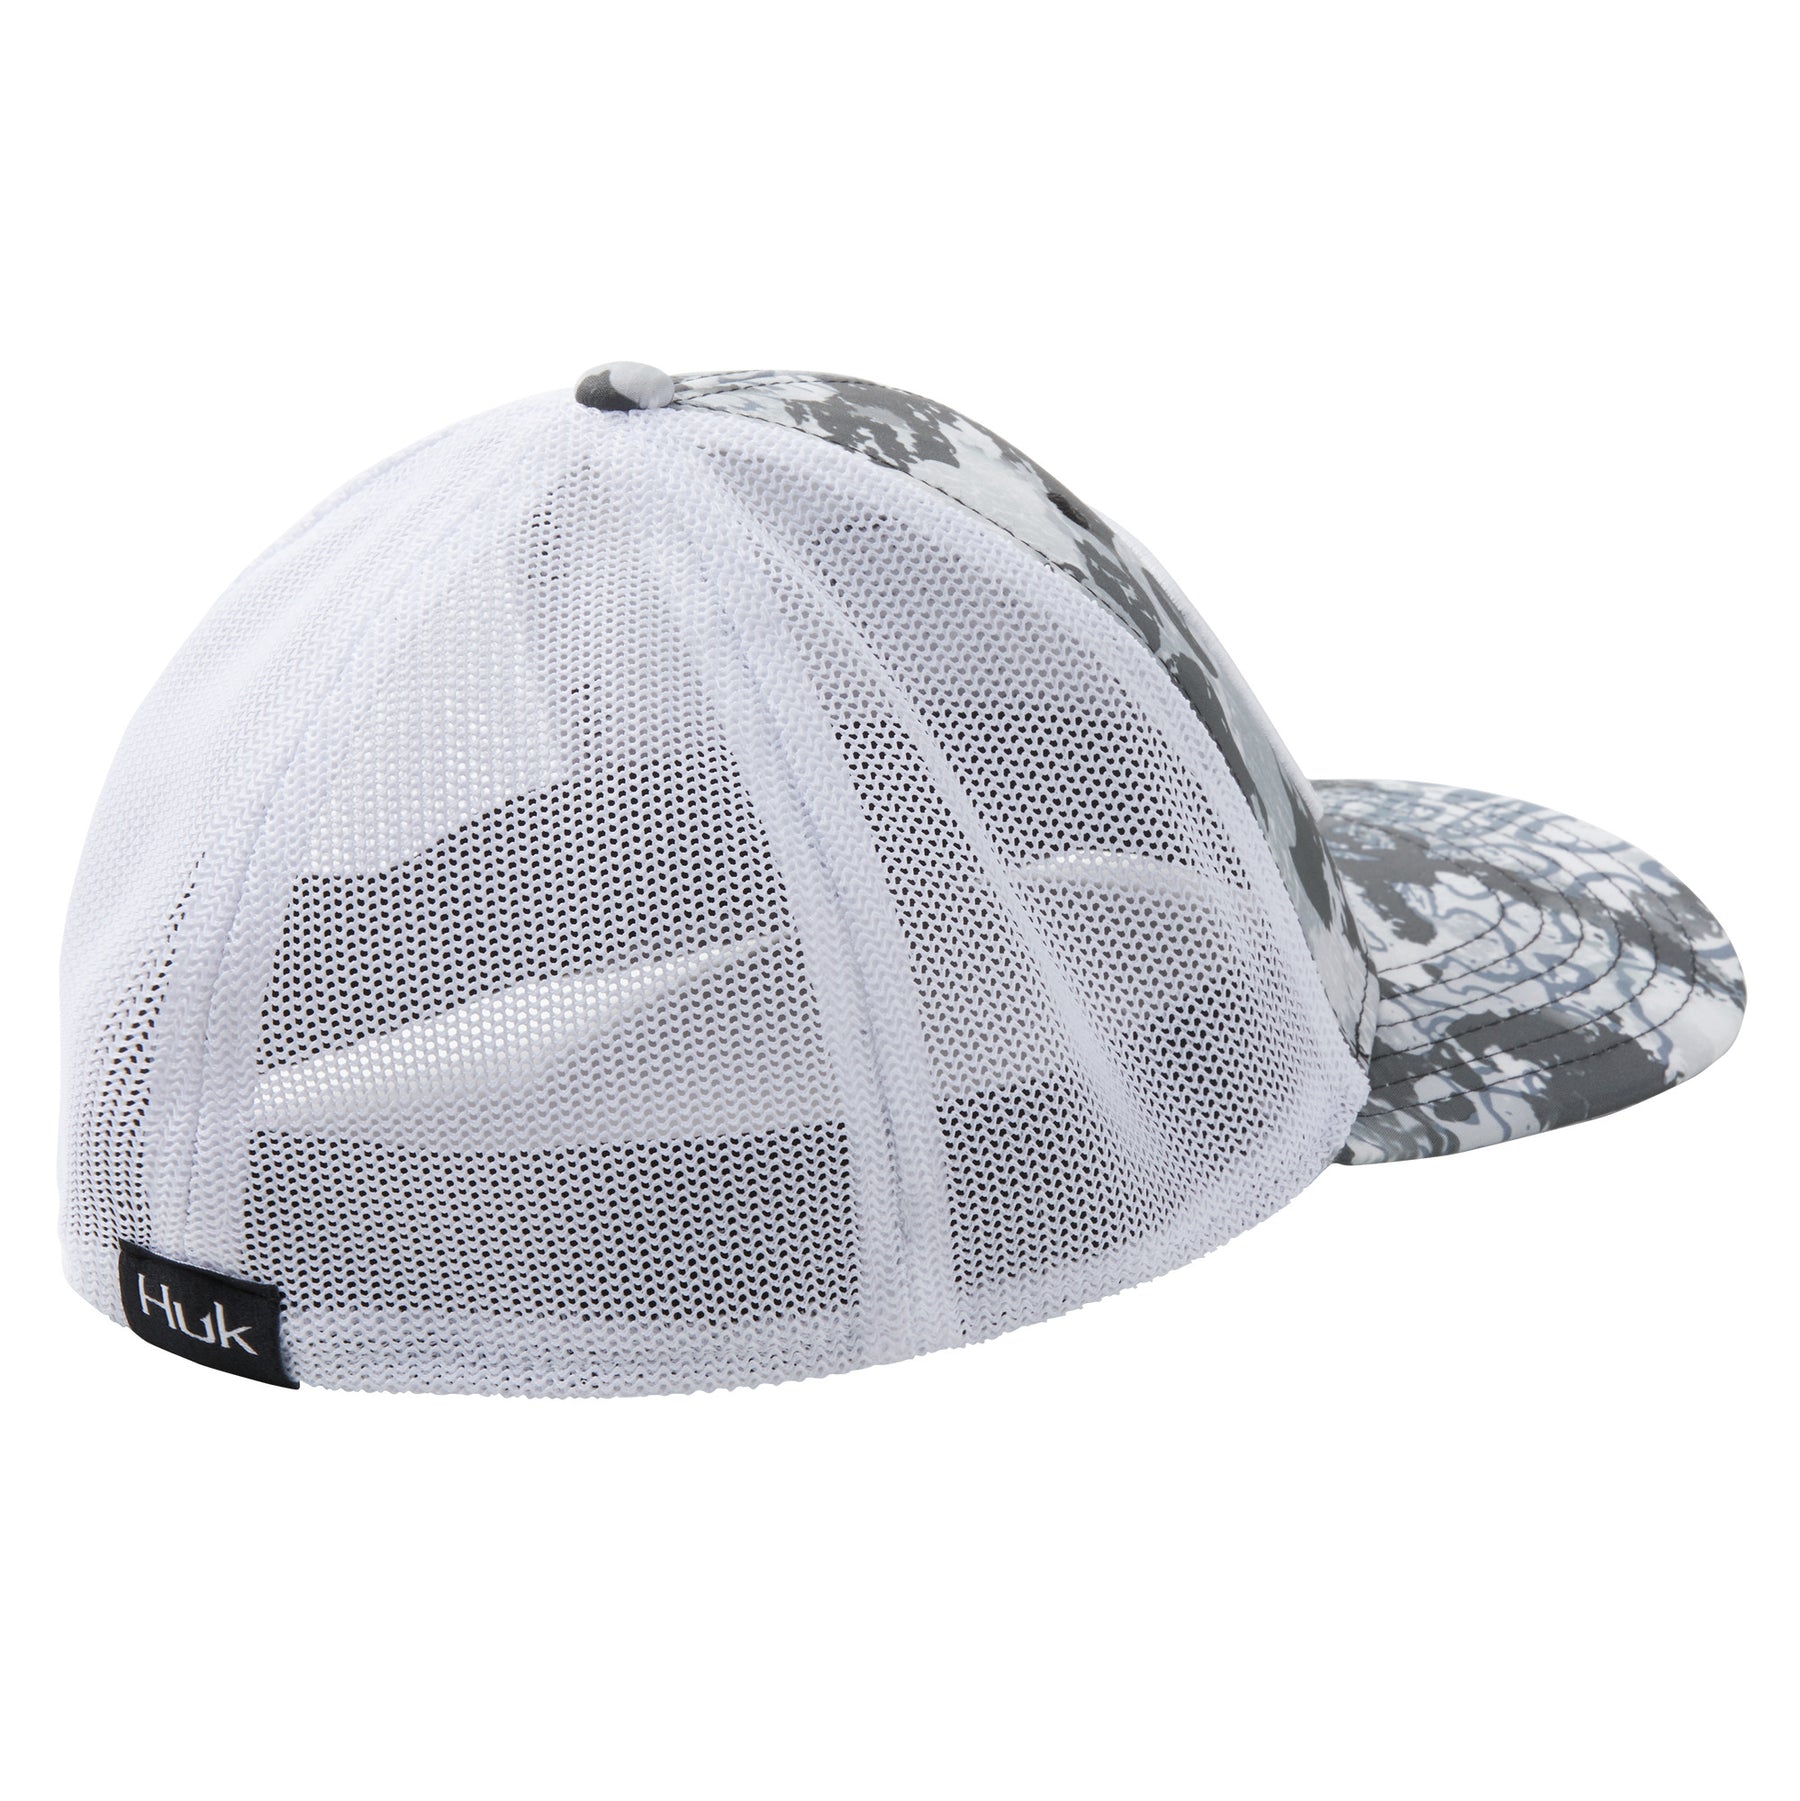 Huk Fishing Performance Hat Fit Stretch Cap Size L/XL Blue White